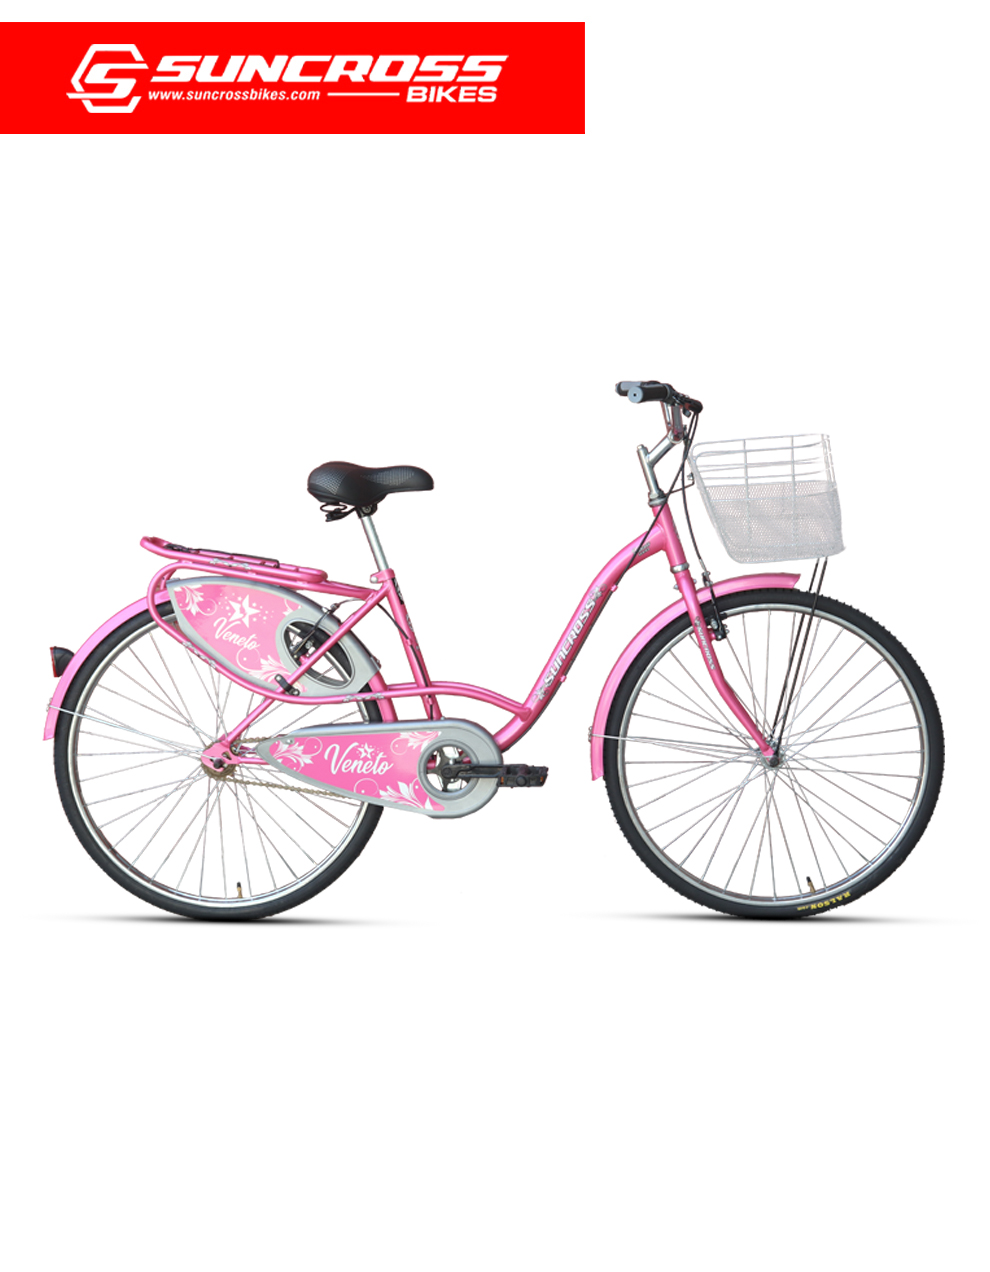 suncross_bikes_women_veneto_pink.jpg